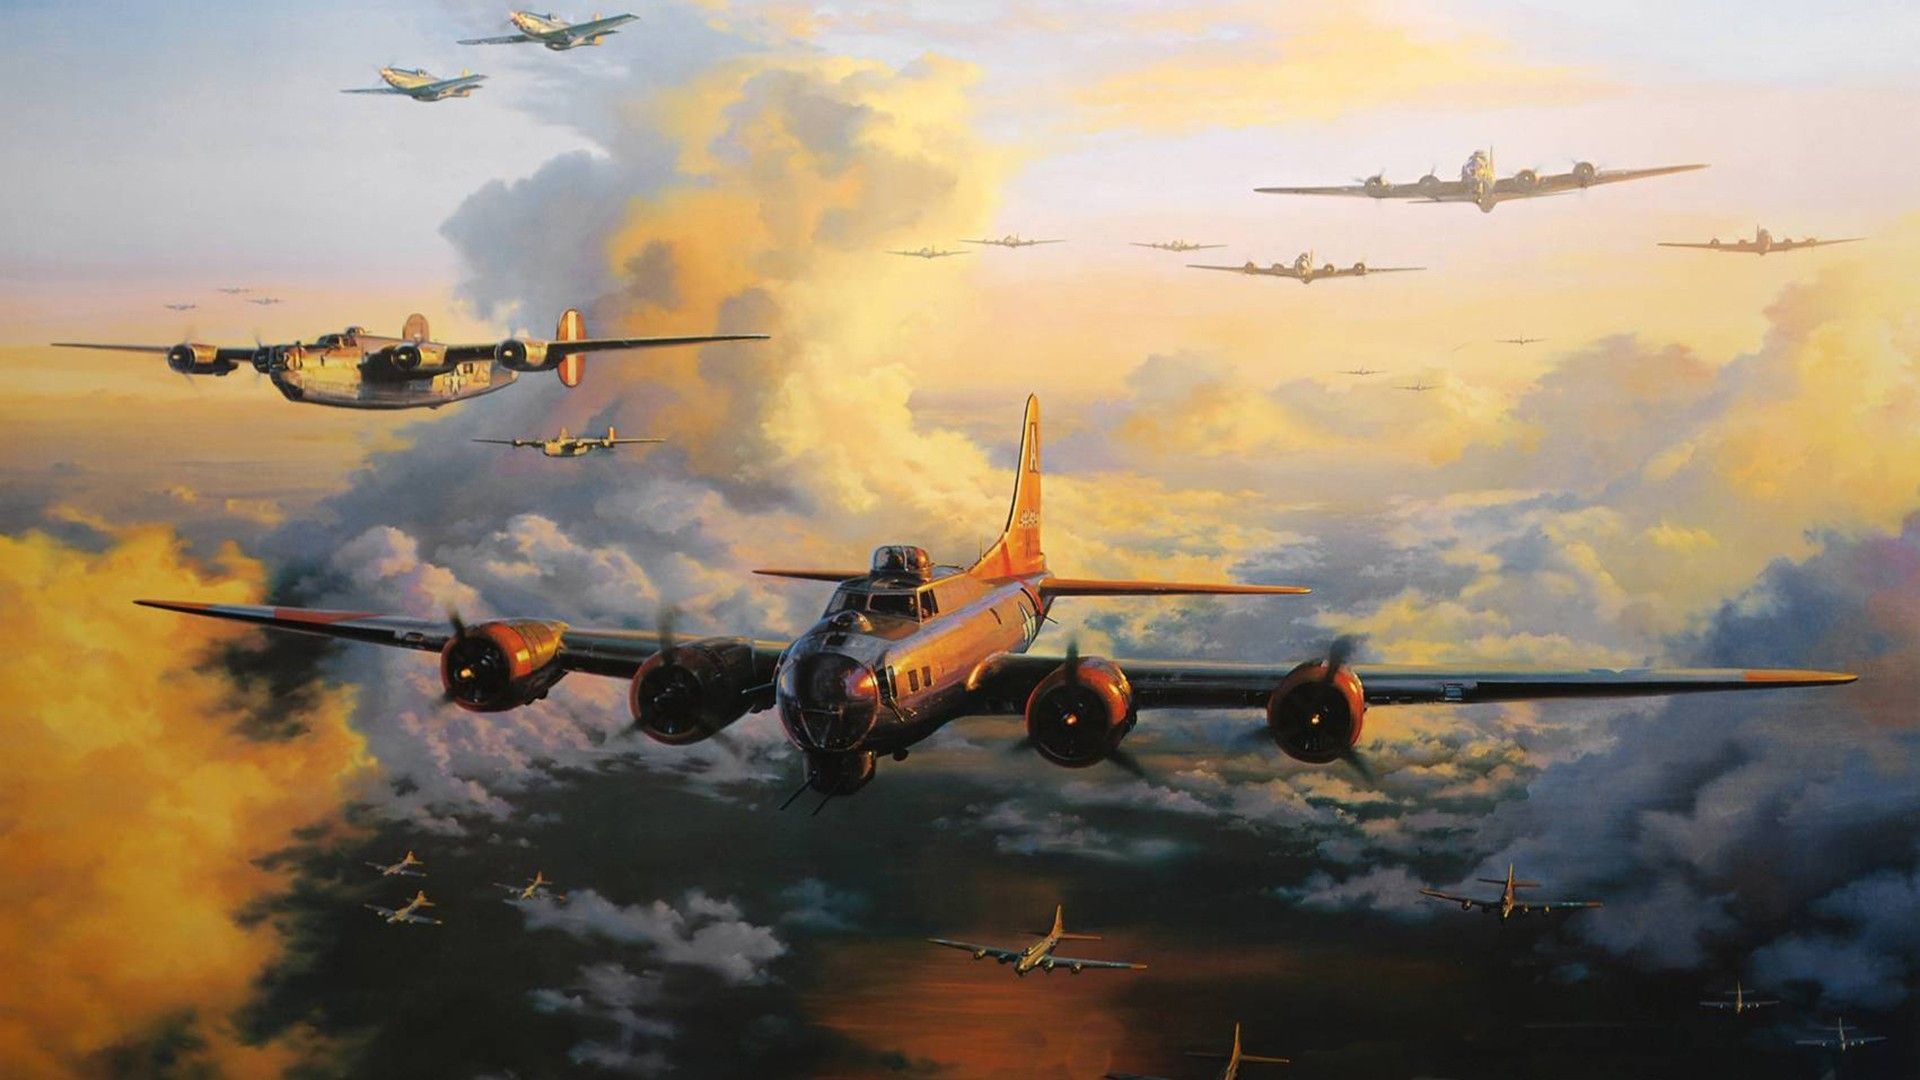 Free download Aircraft military bomber world war ii wallpaper